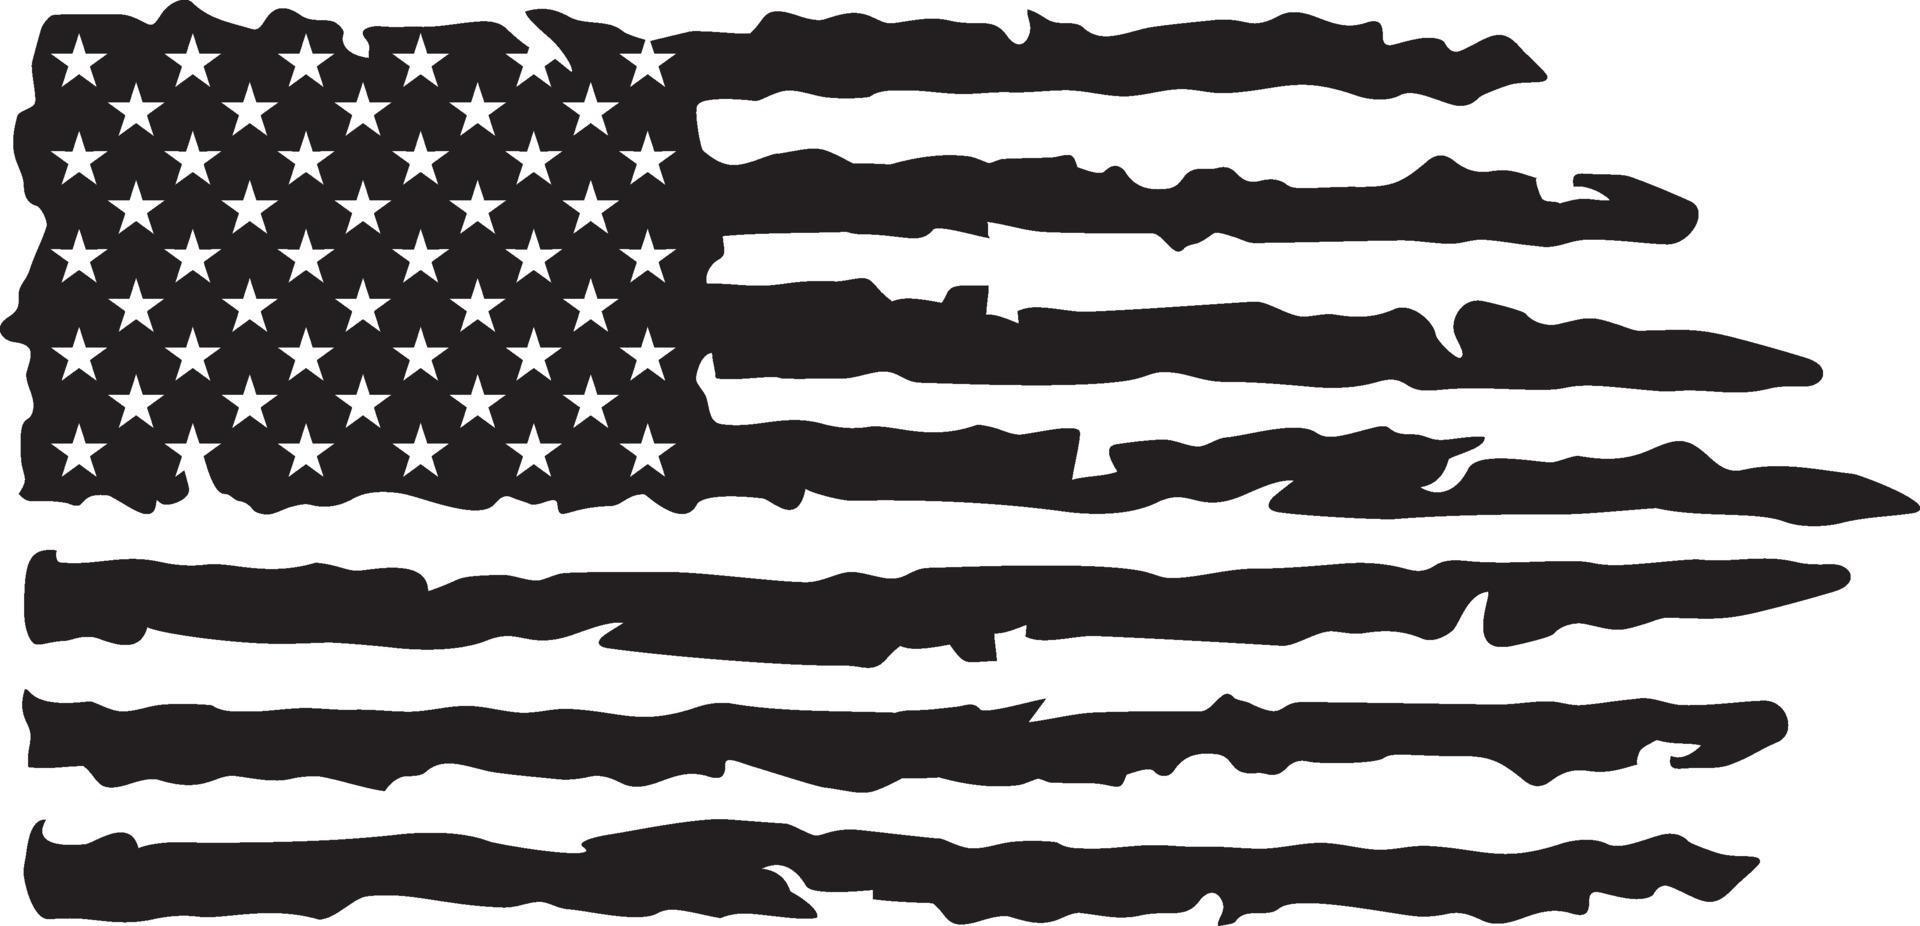 USA grunge flag.